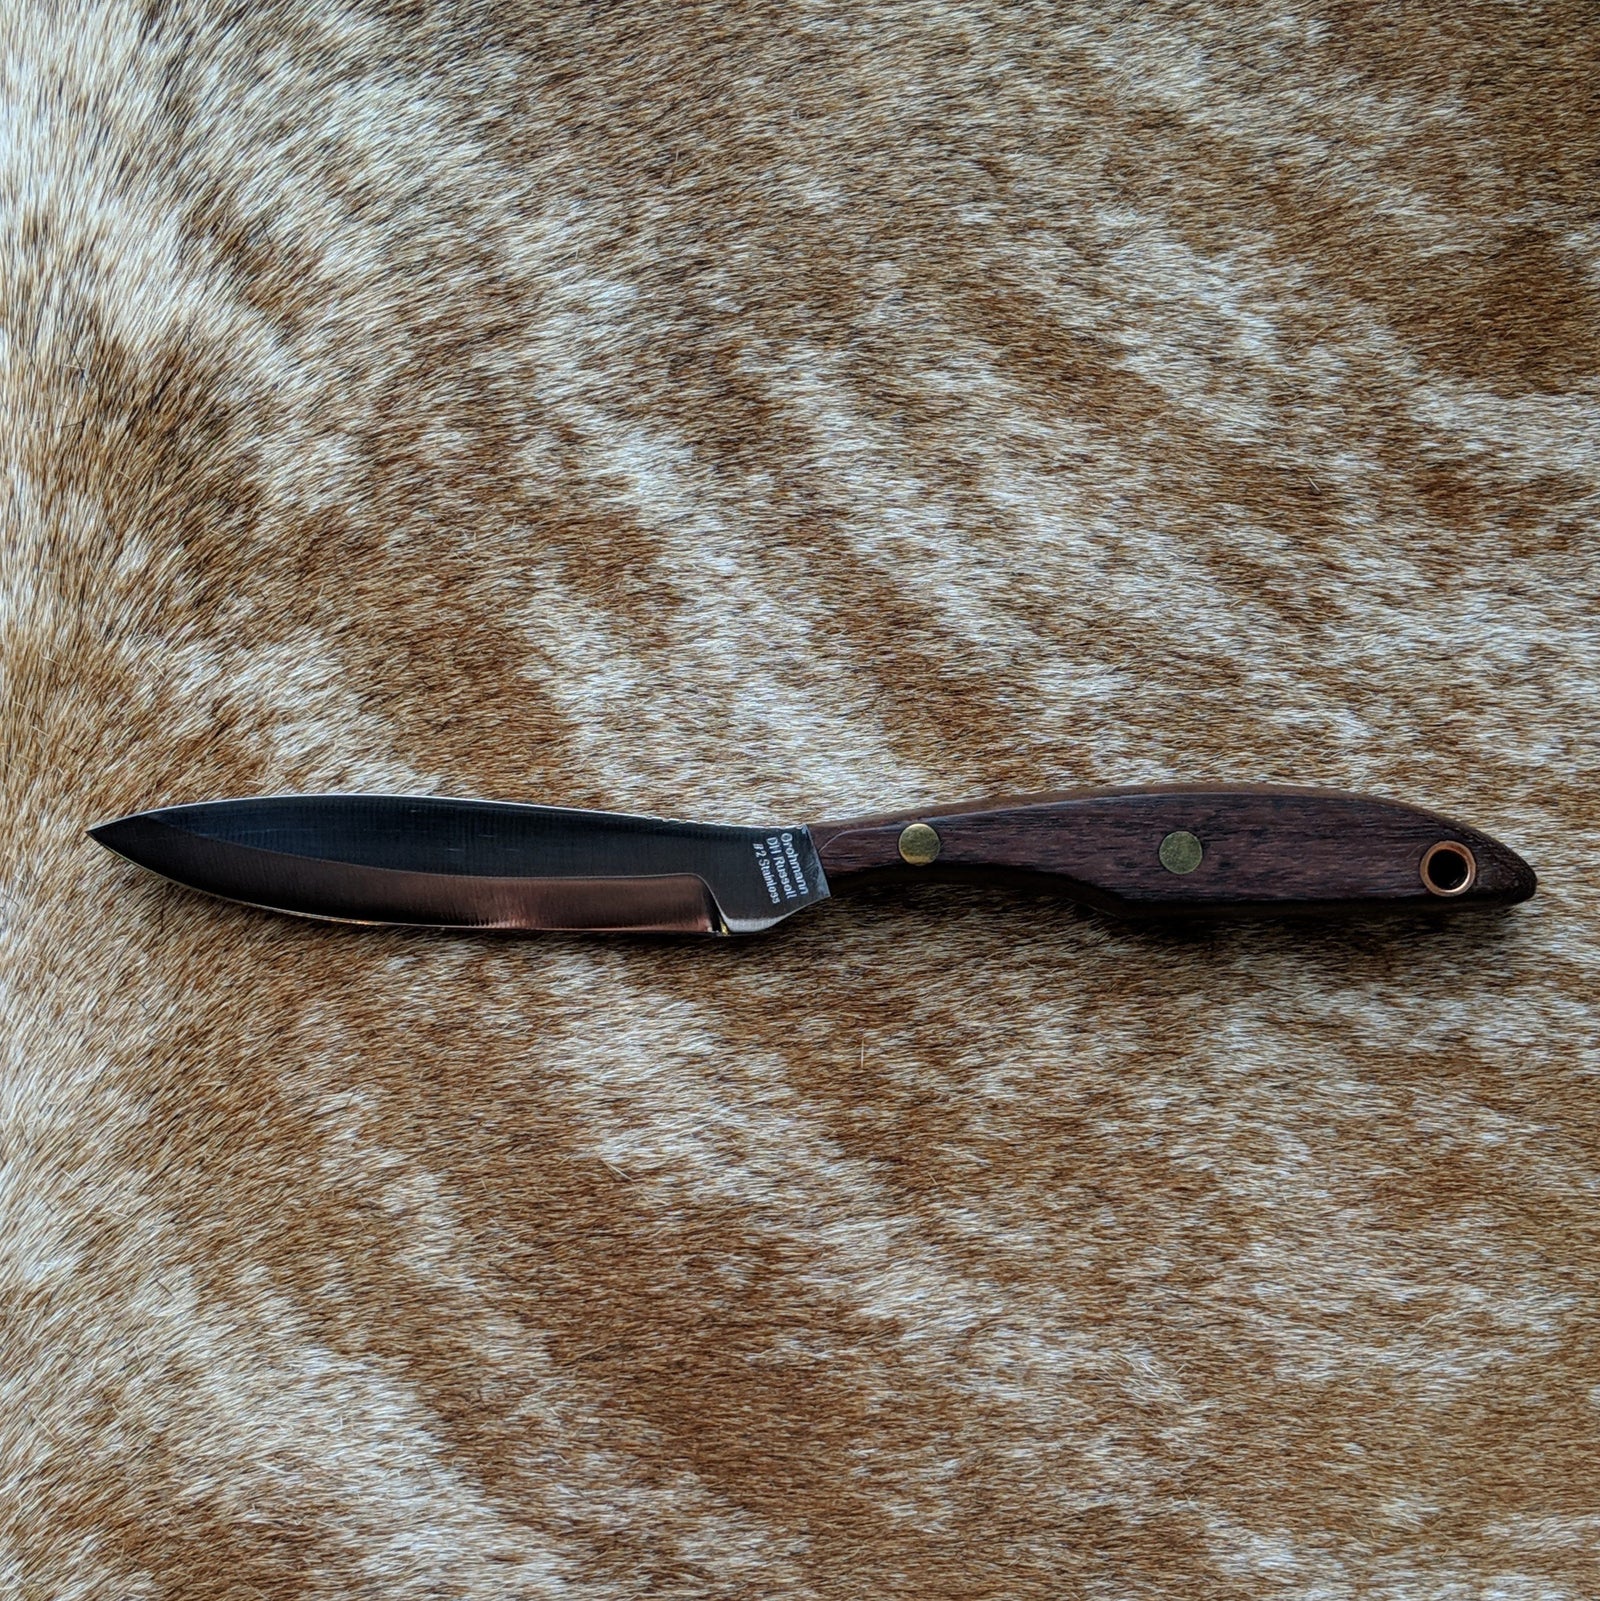 Grohmann D.H. Russell Belt Knife #2 Trout & Bird with Rosewood handle, regular sheath